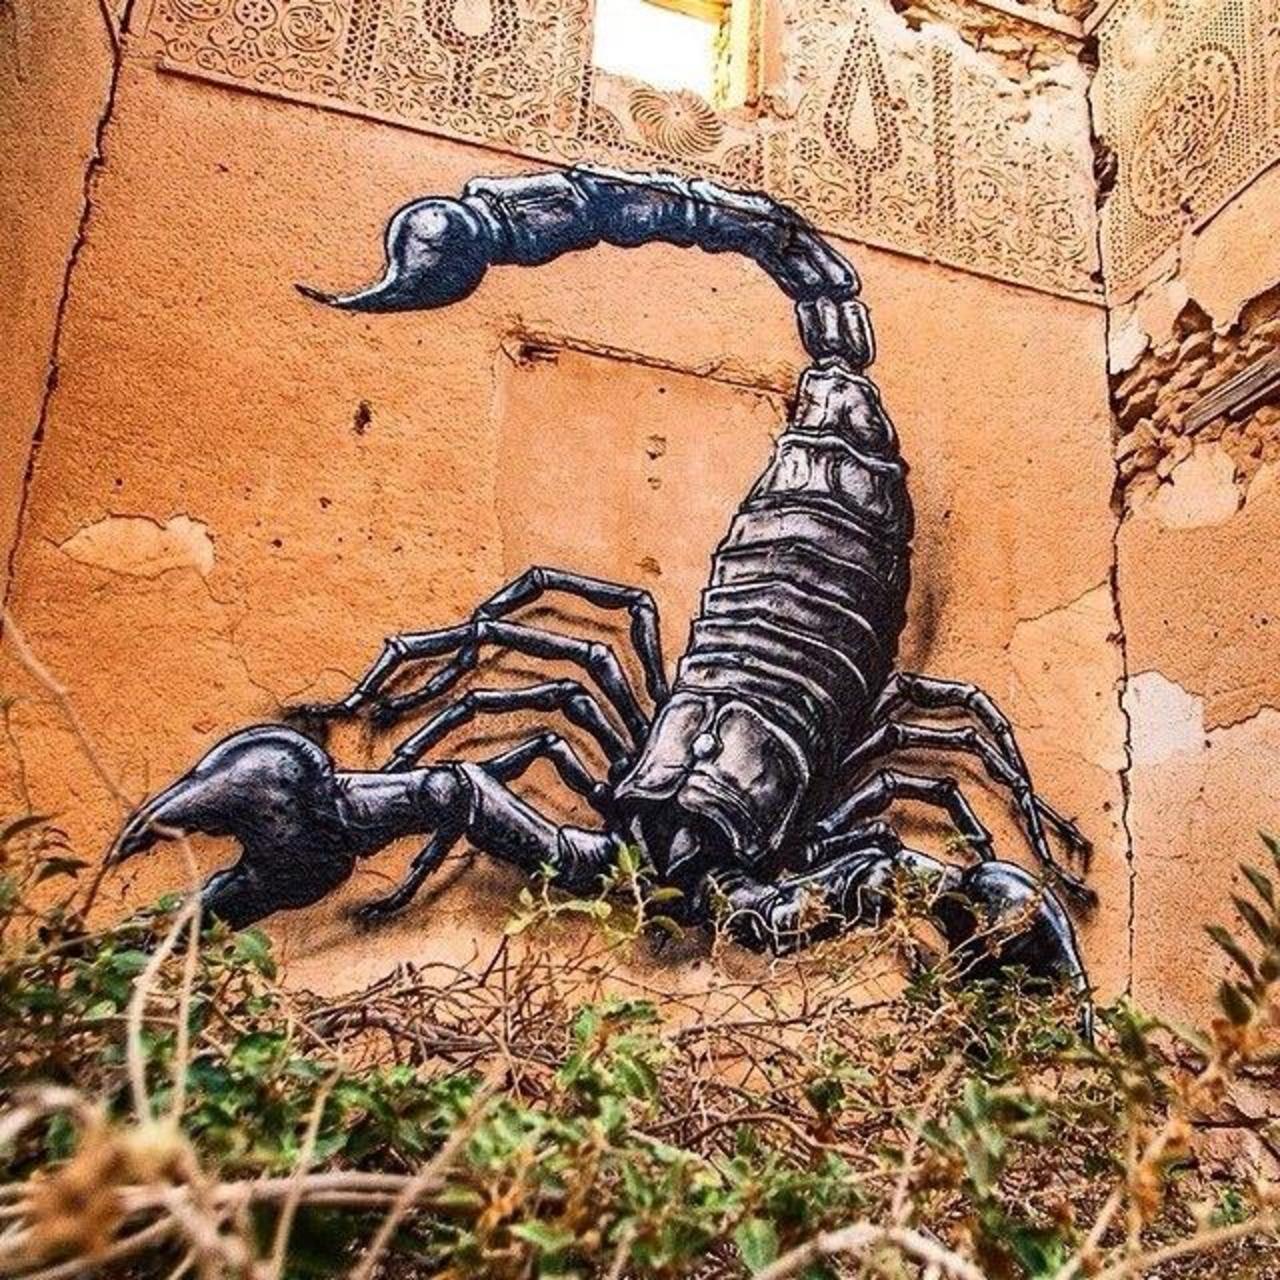 Artist ROA new Scorpion Street Art mural in Djerba, Tunisia #art #graffiti #nature #streetart http://t.co/Ktsa2uuFIW